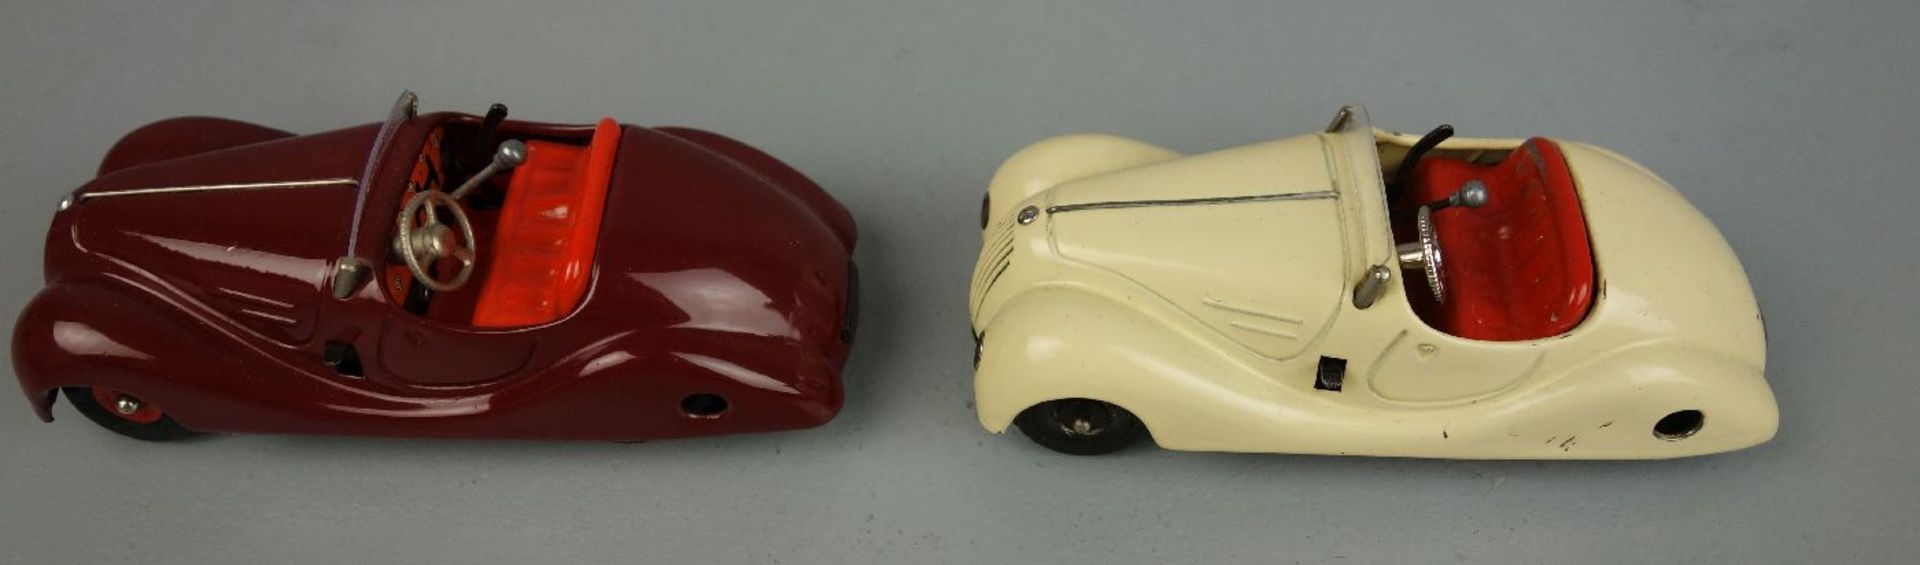 BLECHSPIELZEUGE / FAHRZEUGE: 3 Examico Autos / tin toy cars, Mitte 20. Jh., Manufaktur Schuco / - Bild 7 aus 10